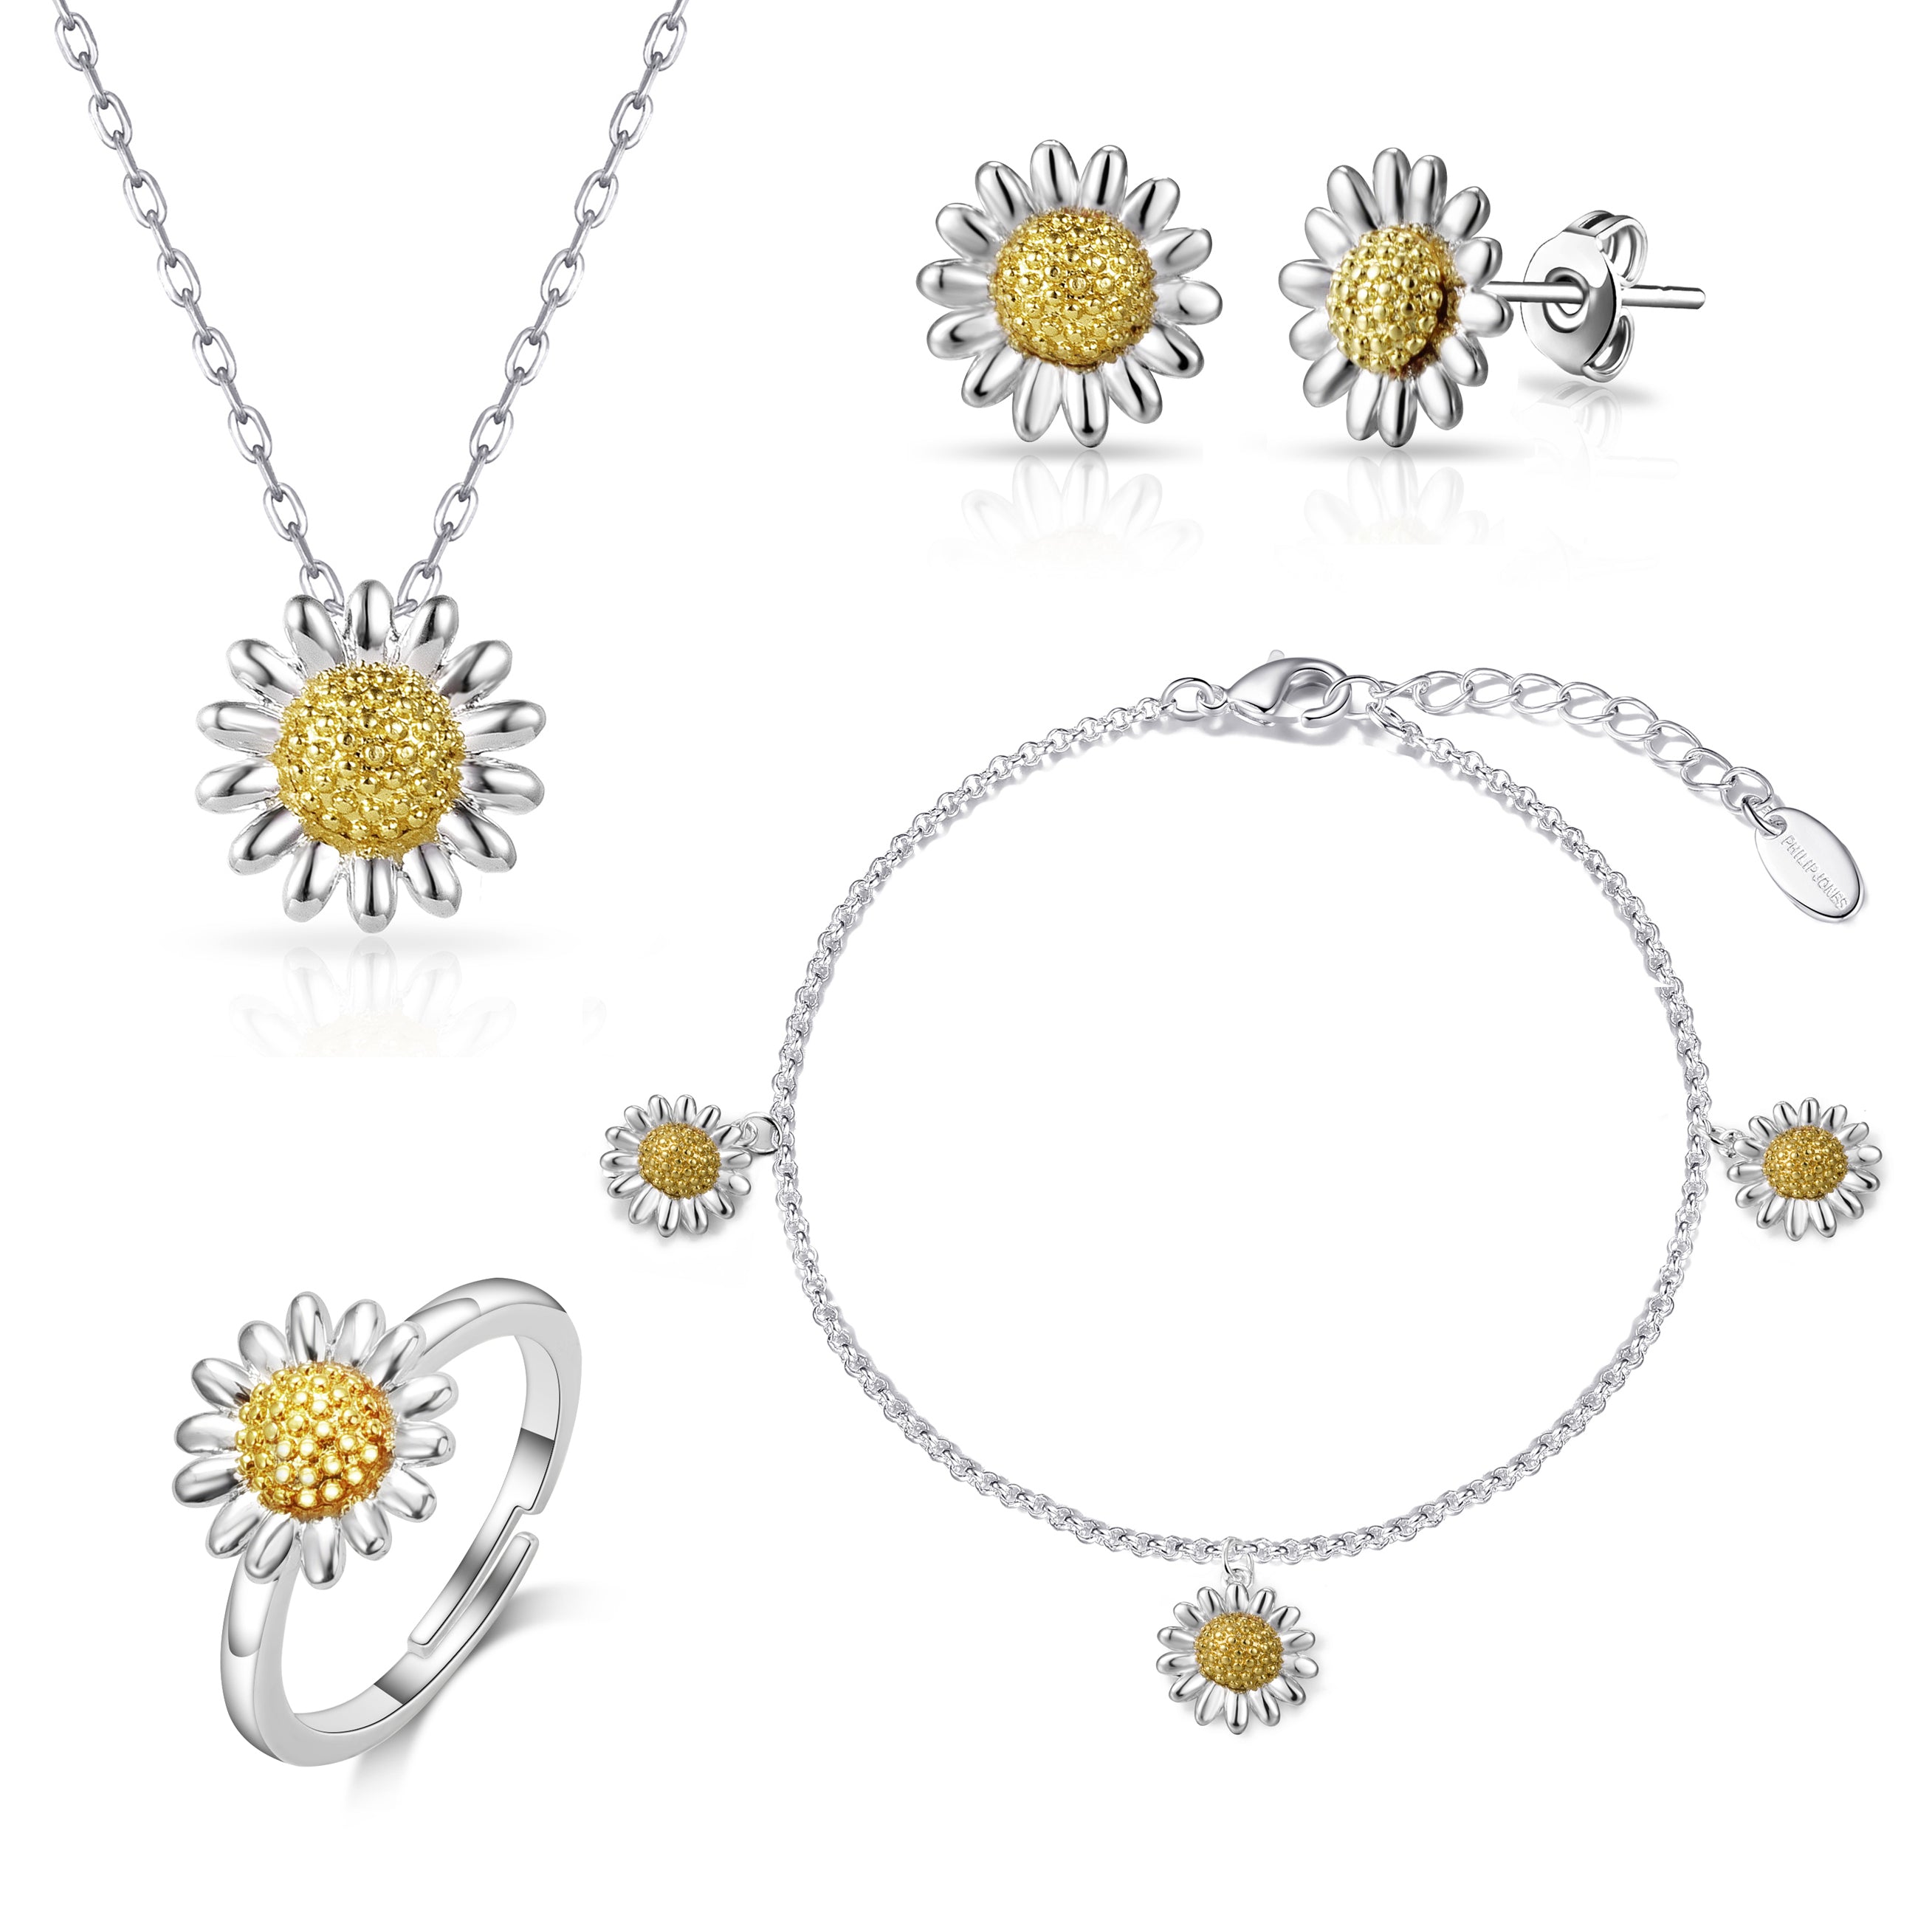 4pc Daisy Bracelet Set by Philip Jones Jewellery